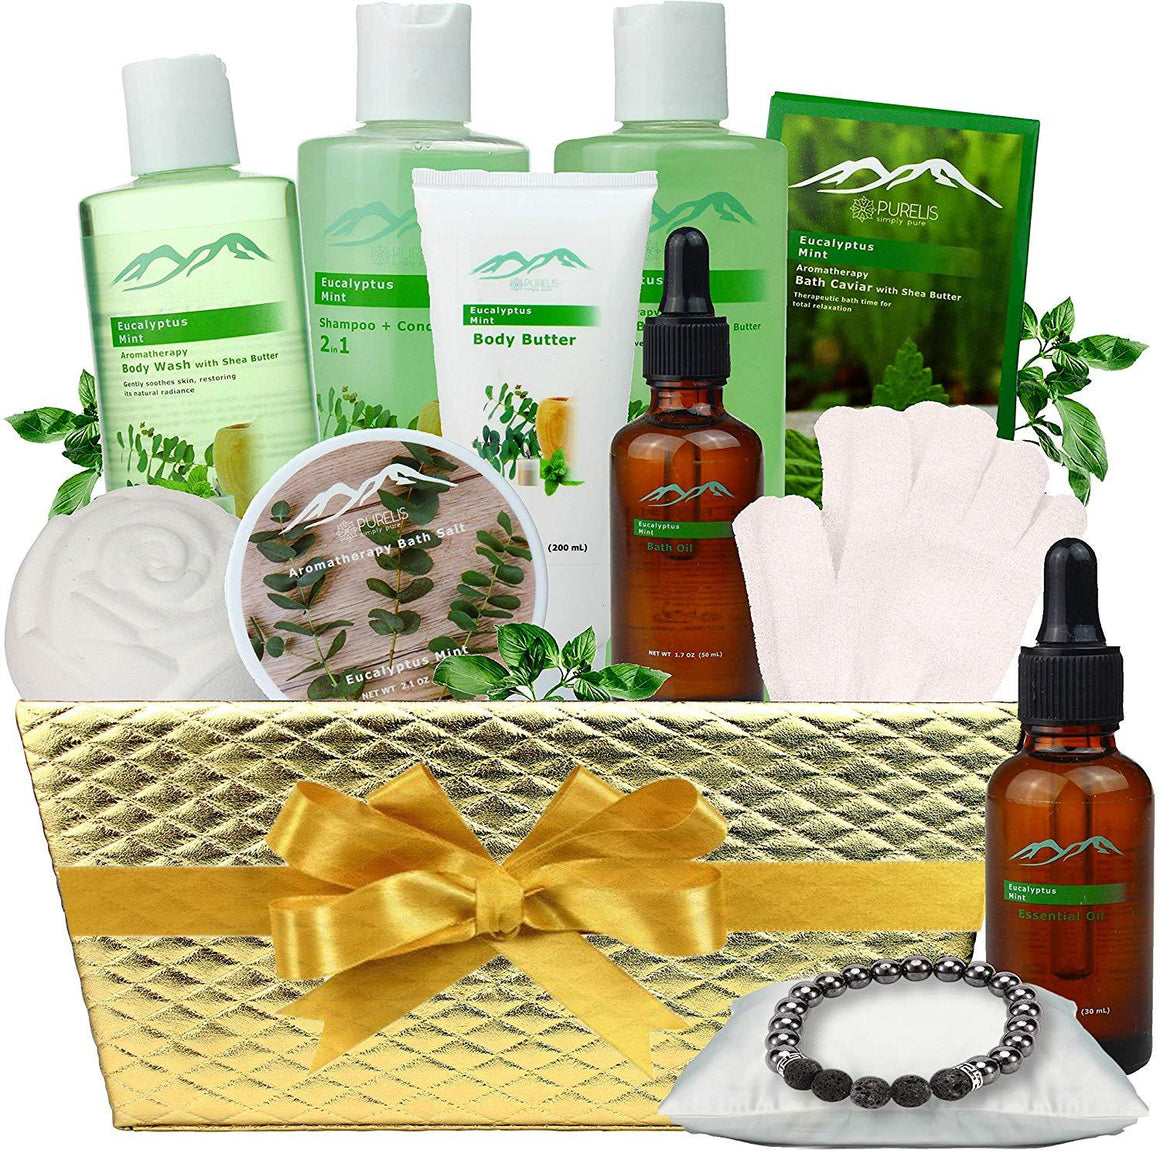 Pampering Gift Set Eucalyptus Mint Aromatherapy Spa Baskets for Men & Women. Bath & Body Spa Gift Baskets for Relaxation! Best Holiday Gift Baskets for Men & Women. - ardenorganics.com